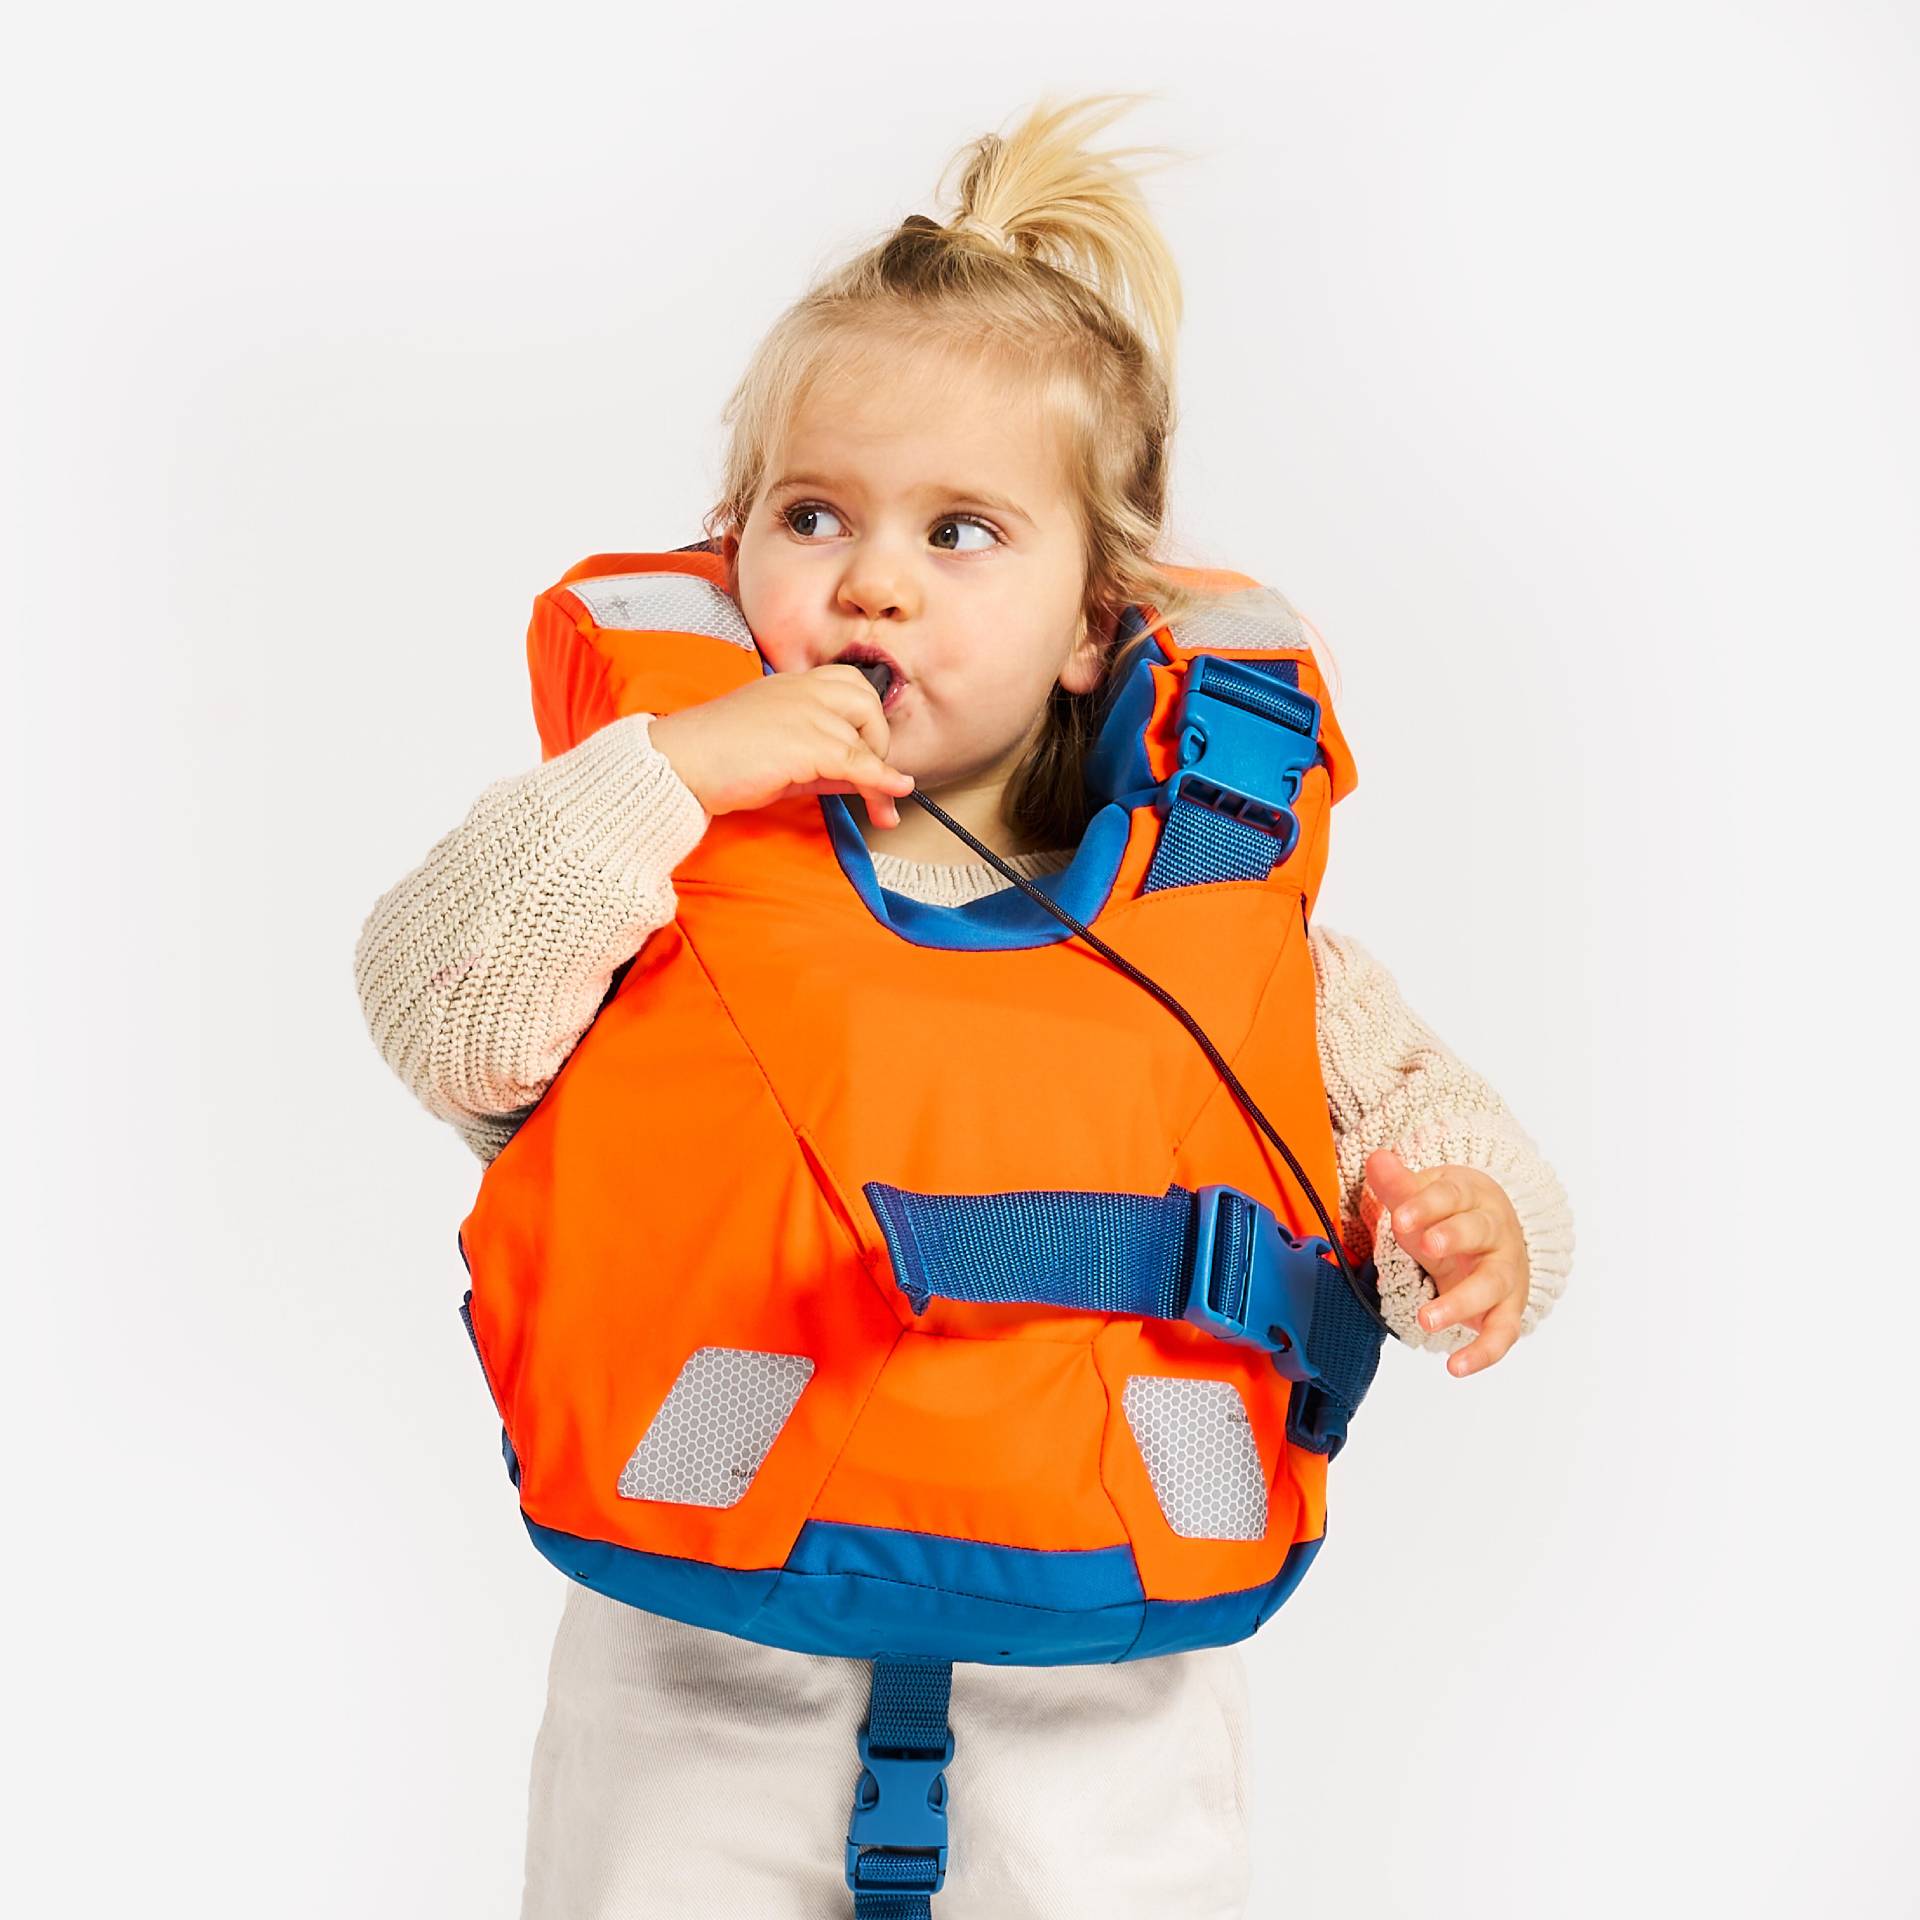 Rettungsweste Kinder 10–15 kg - LJ100N easy orange/blau von TRIBORD